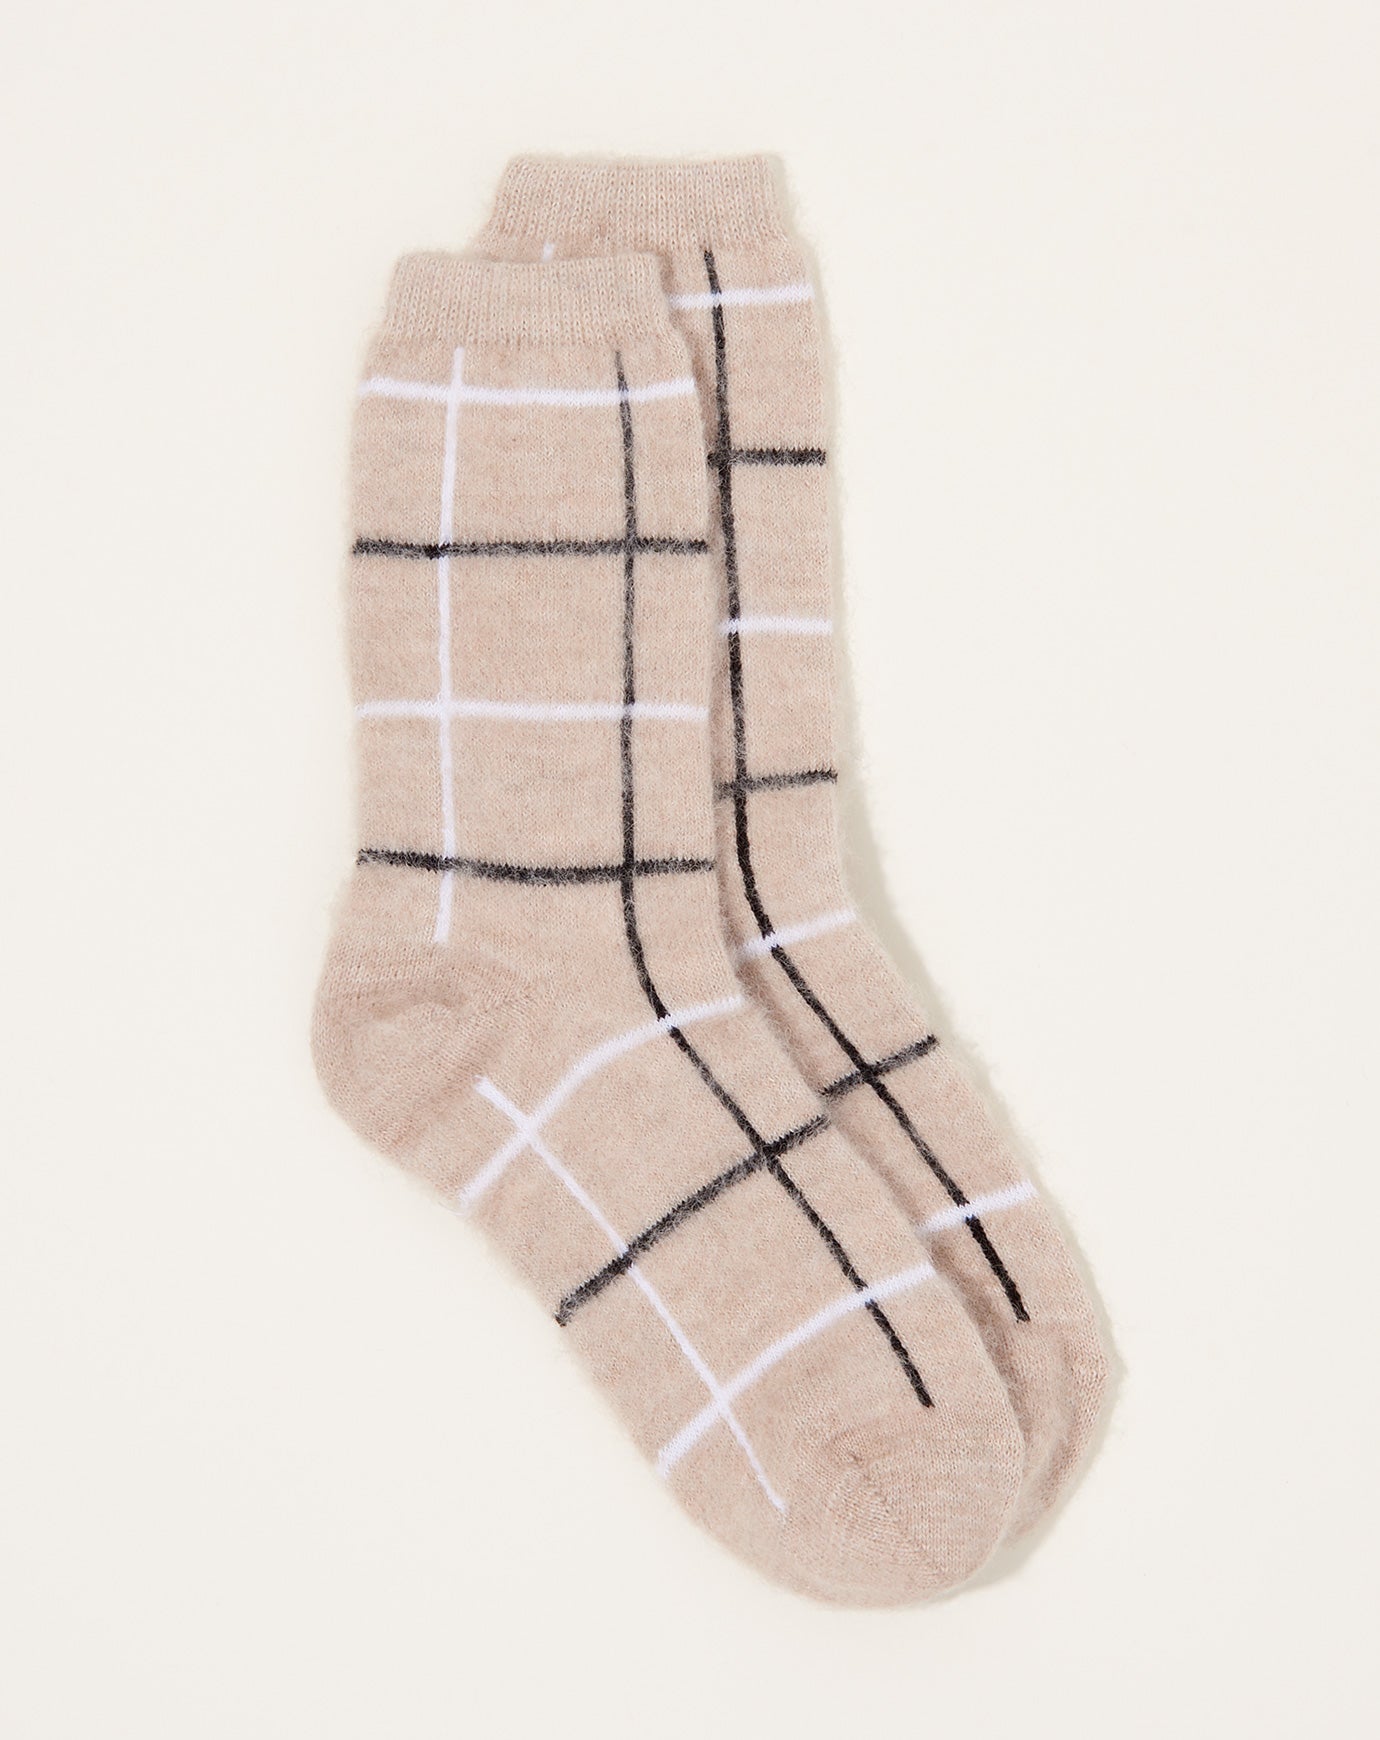 Exquisite J Brushed Mohair Tartan Socks in Oatmeal